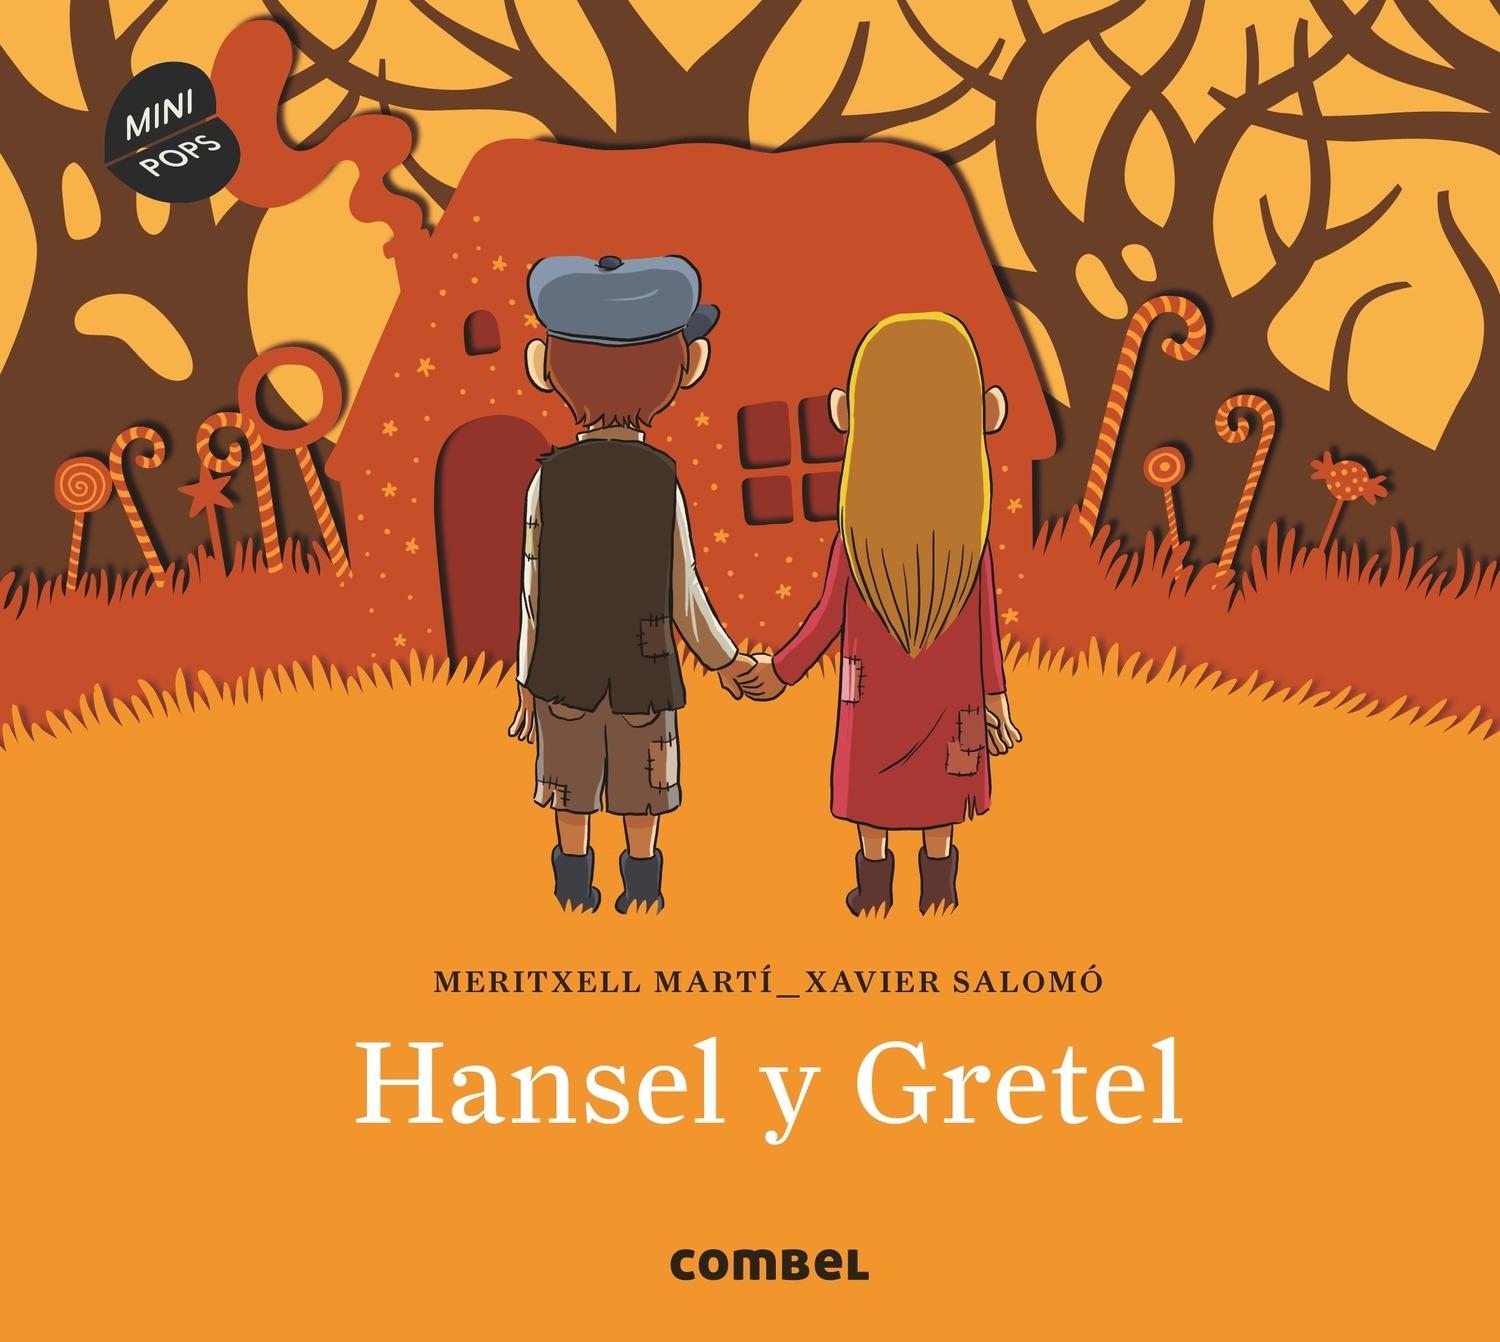 Hansel y Gretel "Mini pops". 